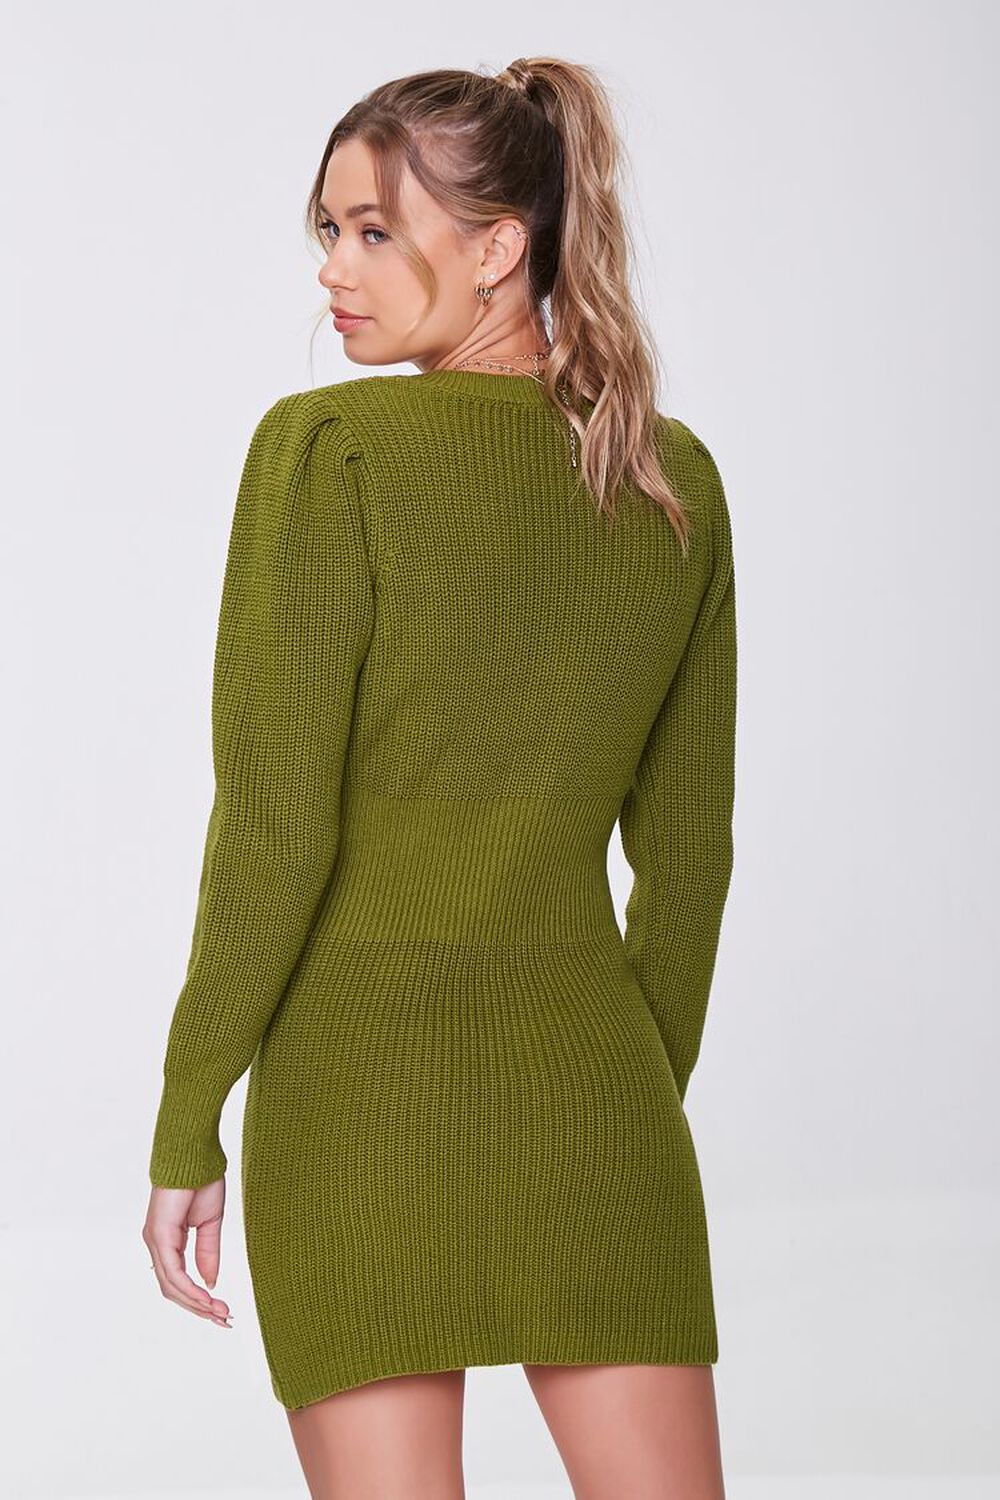 GREEN Ribbed Cardigan Sweater Dress, image 3